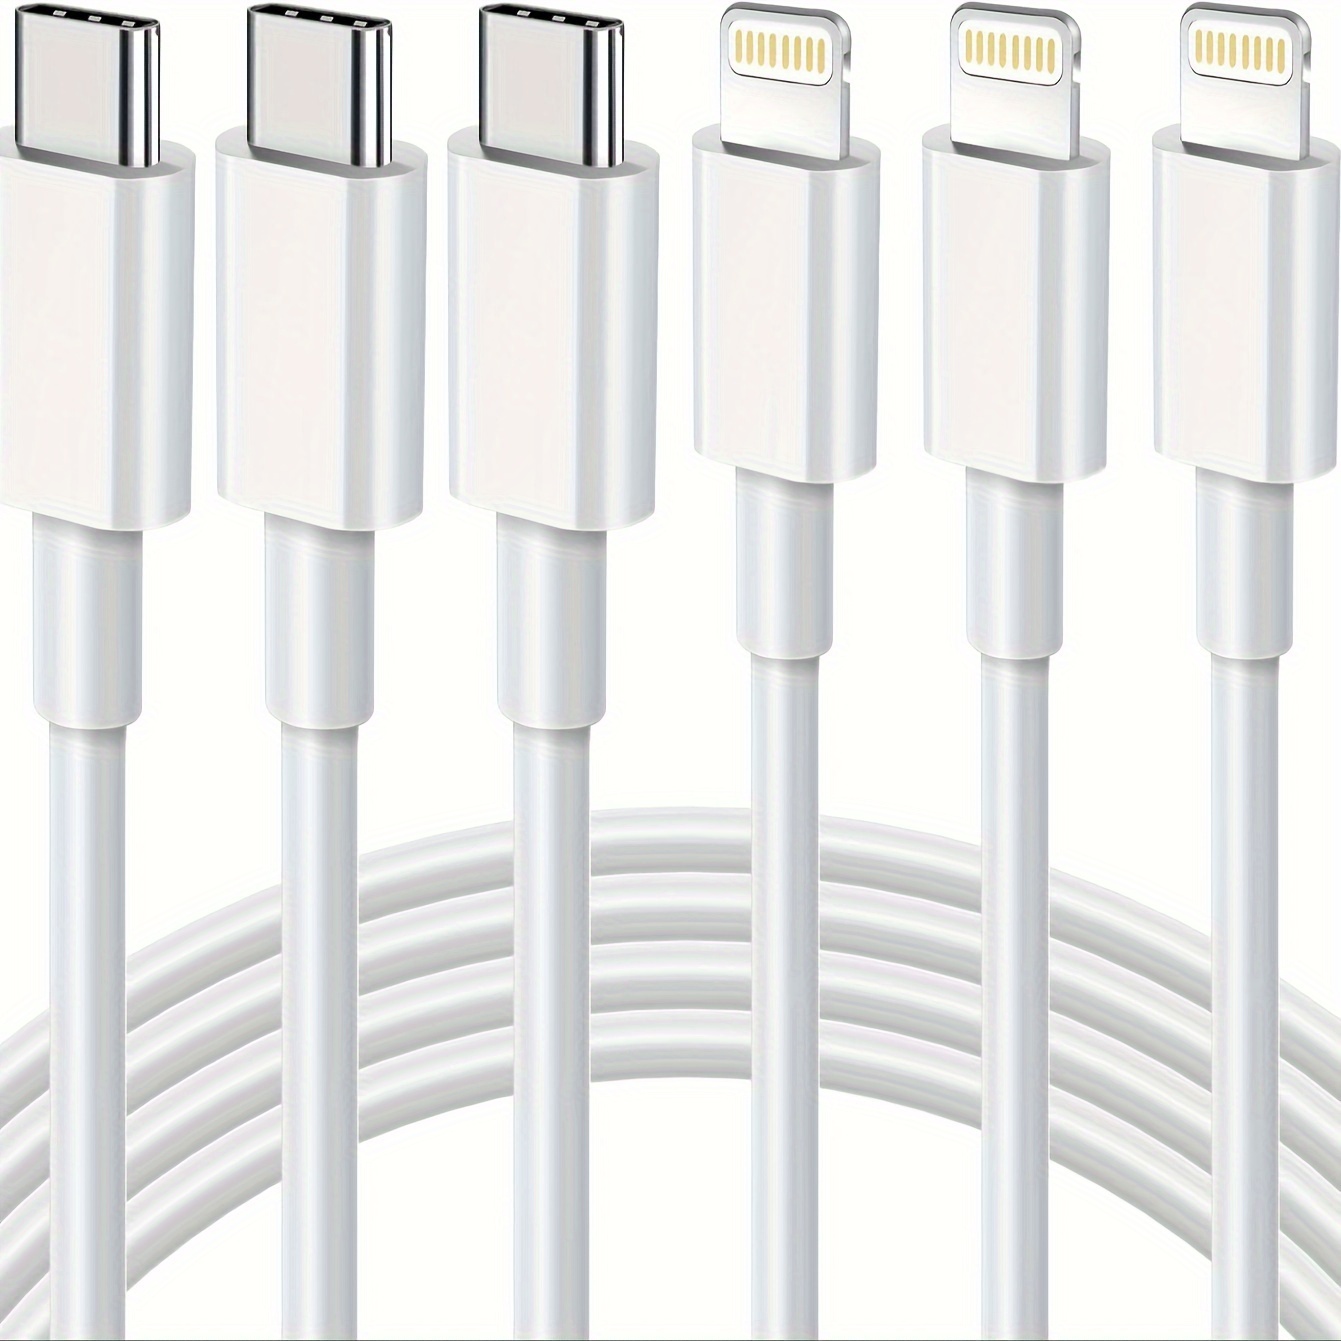  Cargador original de Apple [certificado Apple MFi] Cable  Lightning a USB compatible con iPhone Xs Max/Xr/Xs/X/8/7/6s/6plus/5s, iPad  Pro/Air/Mini, iPod Touch (blanco 1M/3.3 pies) certificado original :  Electrónica